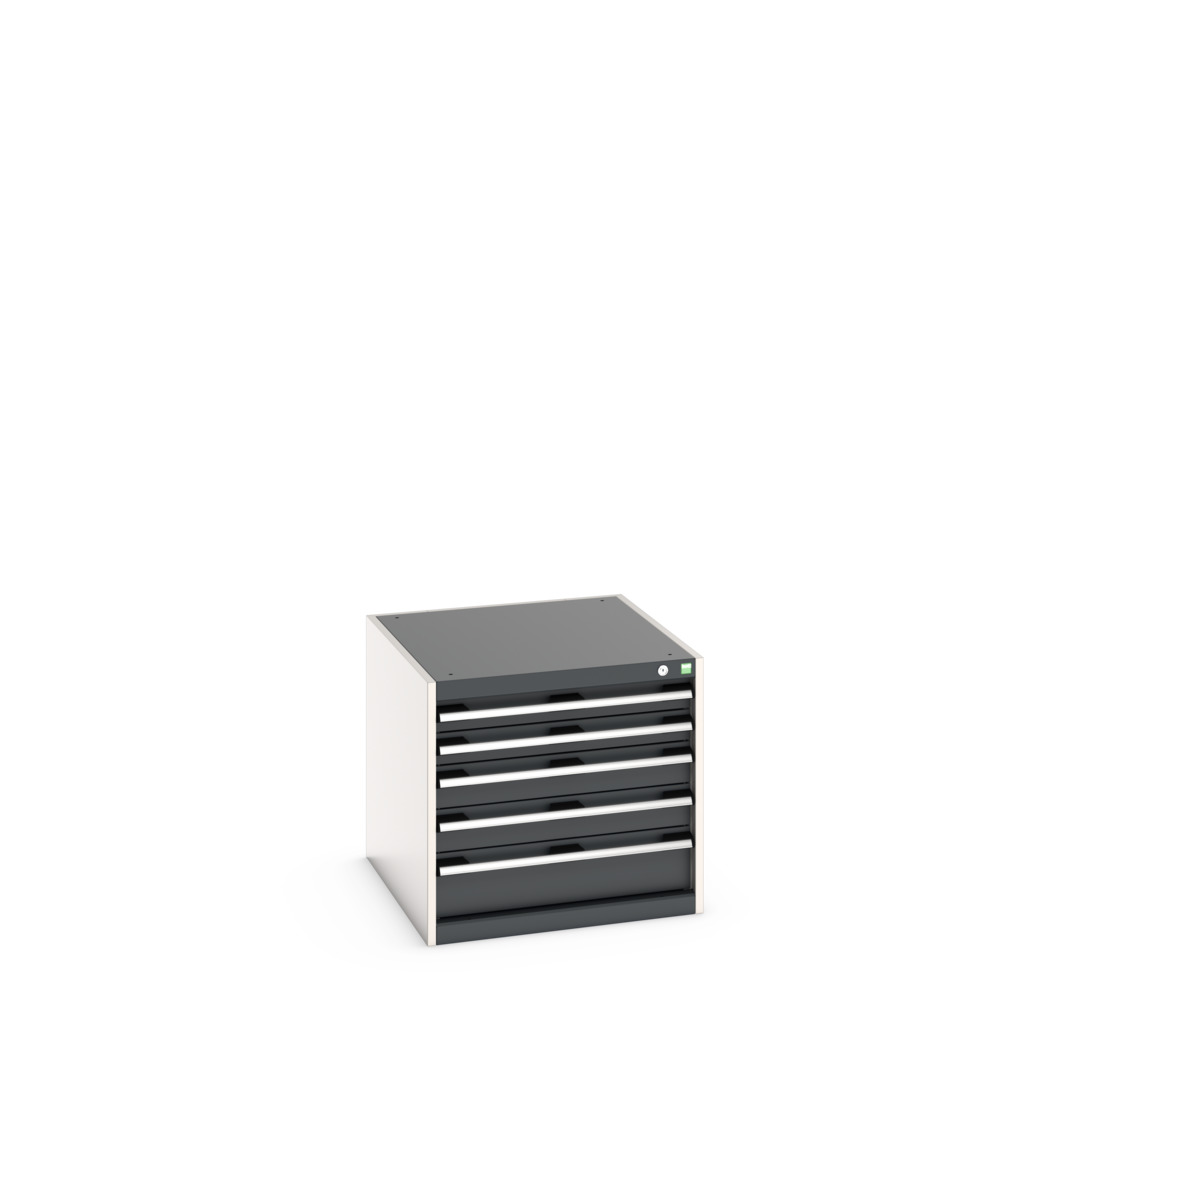 40027102. - cubio drawer cabinet 